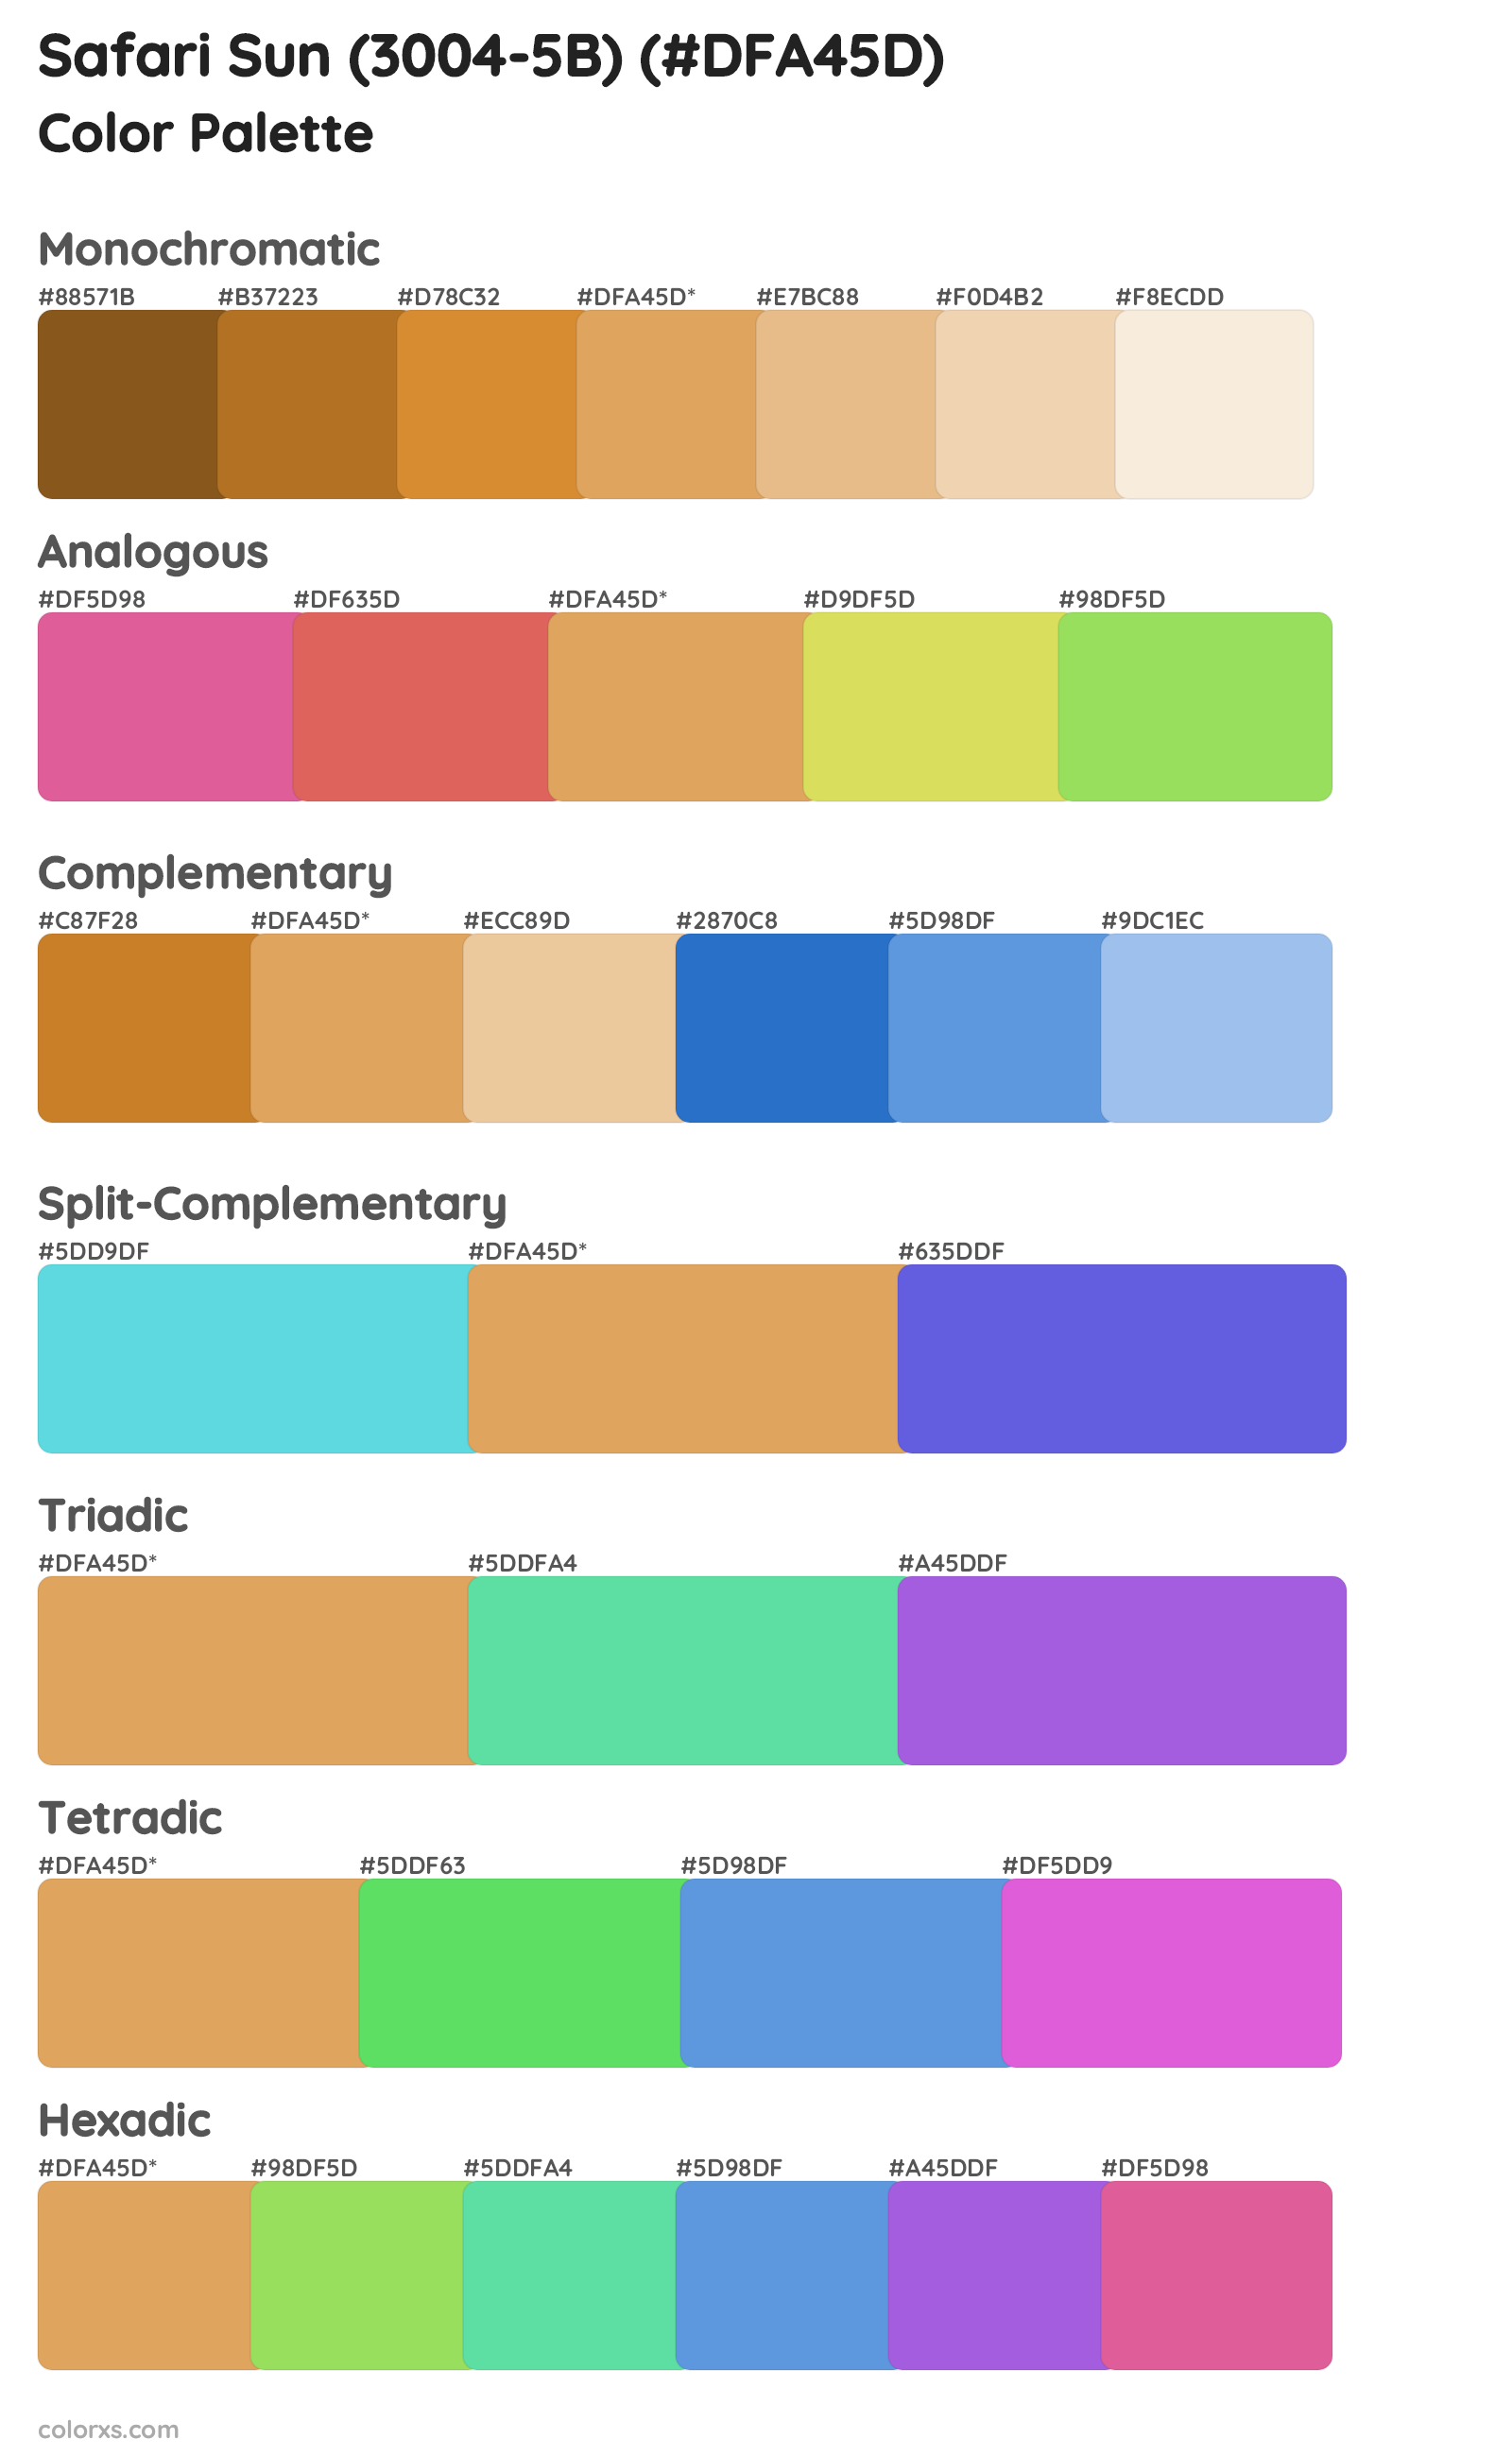 Safari Sun (3004-5B) Color Scheme Palettes